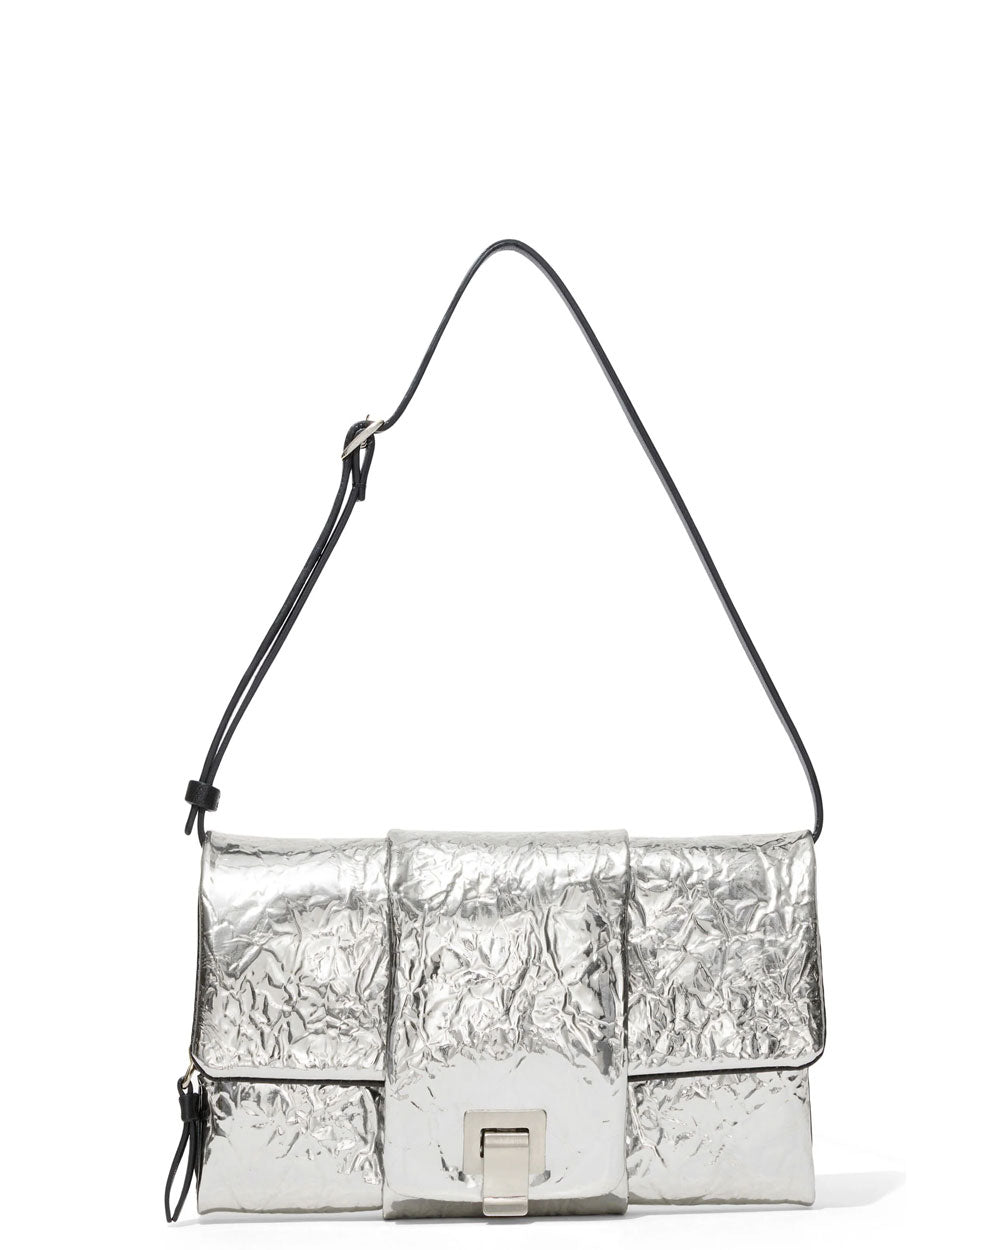 Flip Metallic Shoulder Bag in Silver